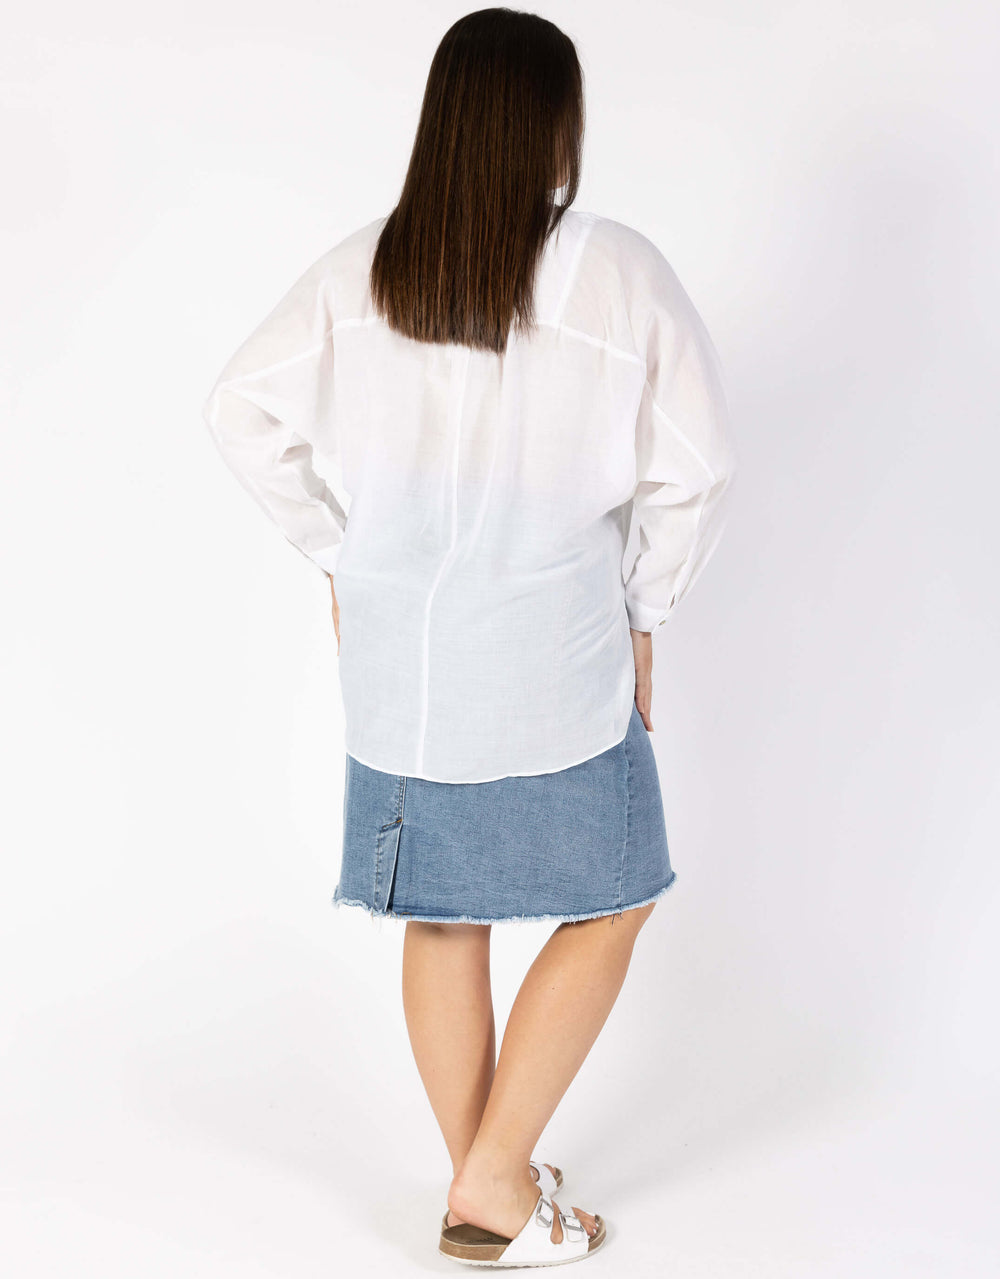 betty-basics-annabelle-blouse-white-plus-size-clothing